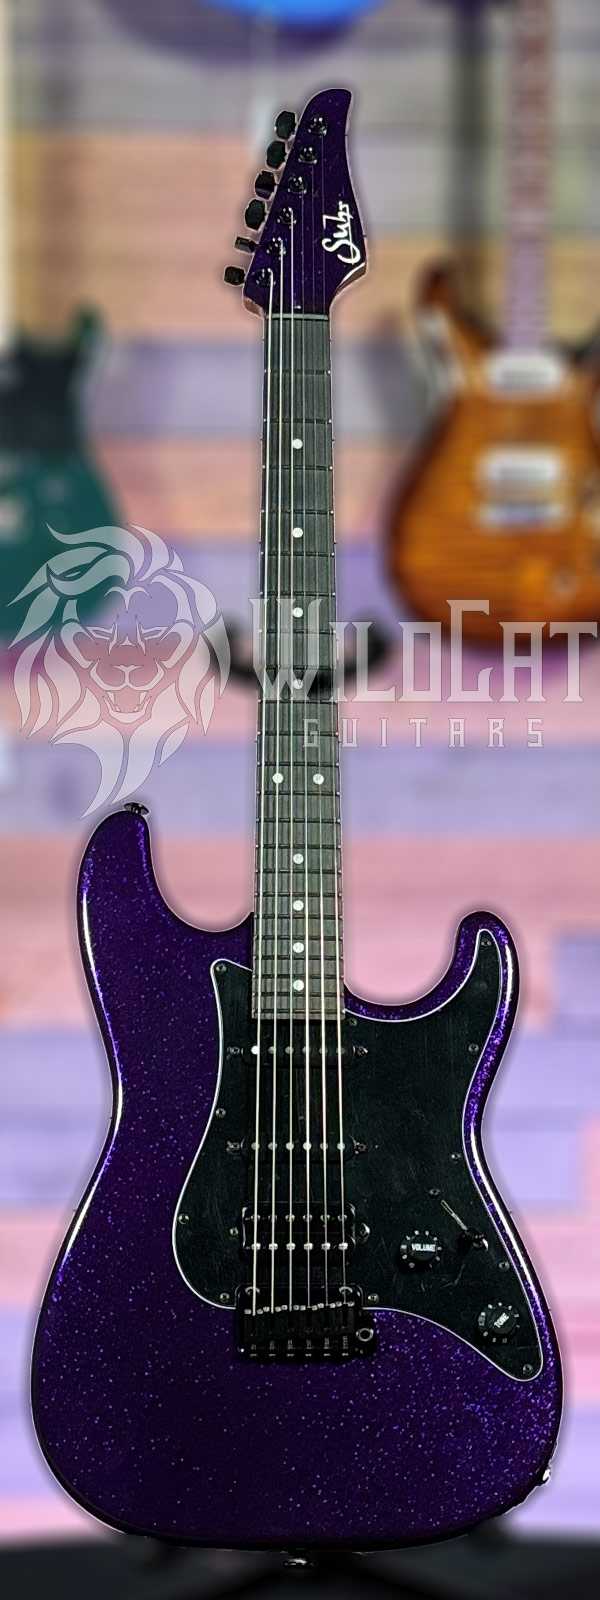 Suhr Custom Classic S Matching Headstock Ebony Board Purple Sparkle 75284